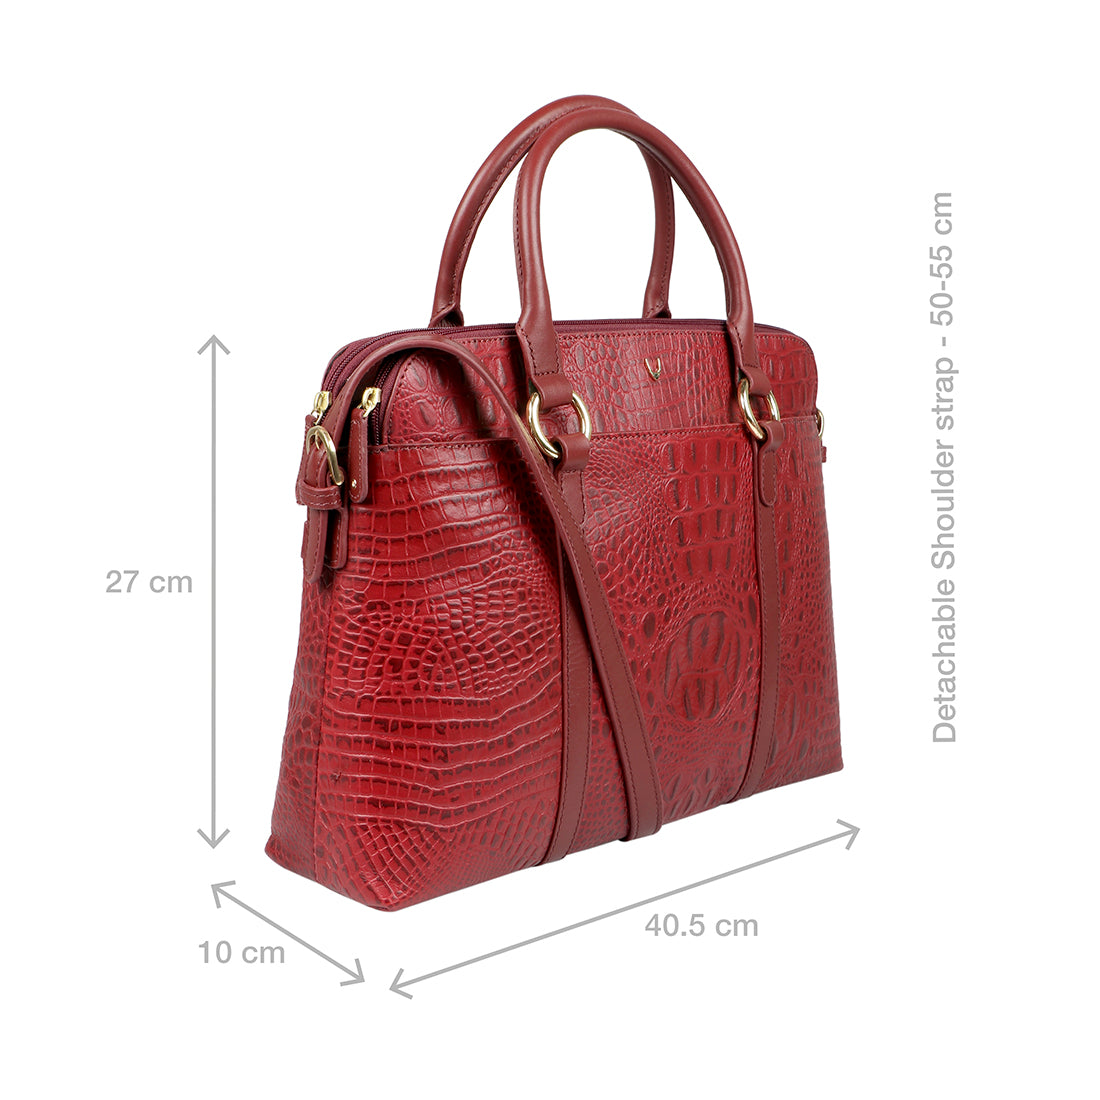 Hidesign Laptop Bags : Buy Hidesign Lovato Women Laptop Bags (L